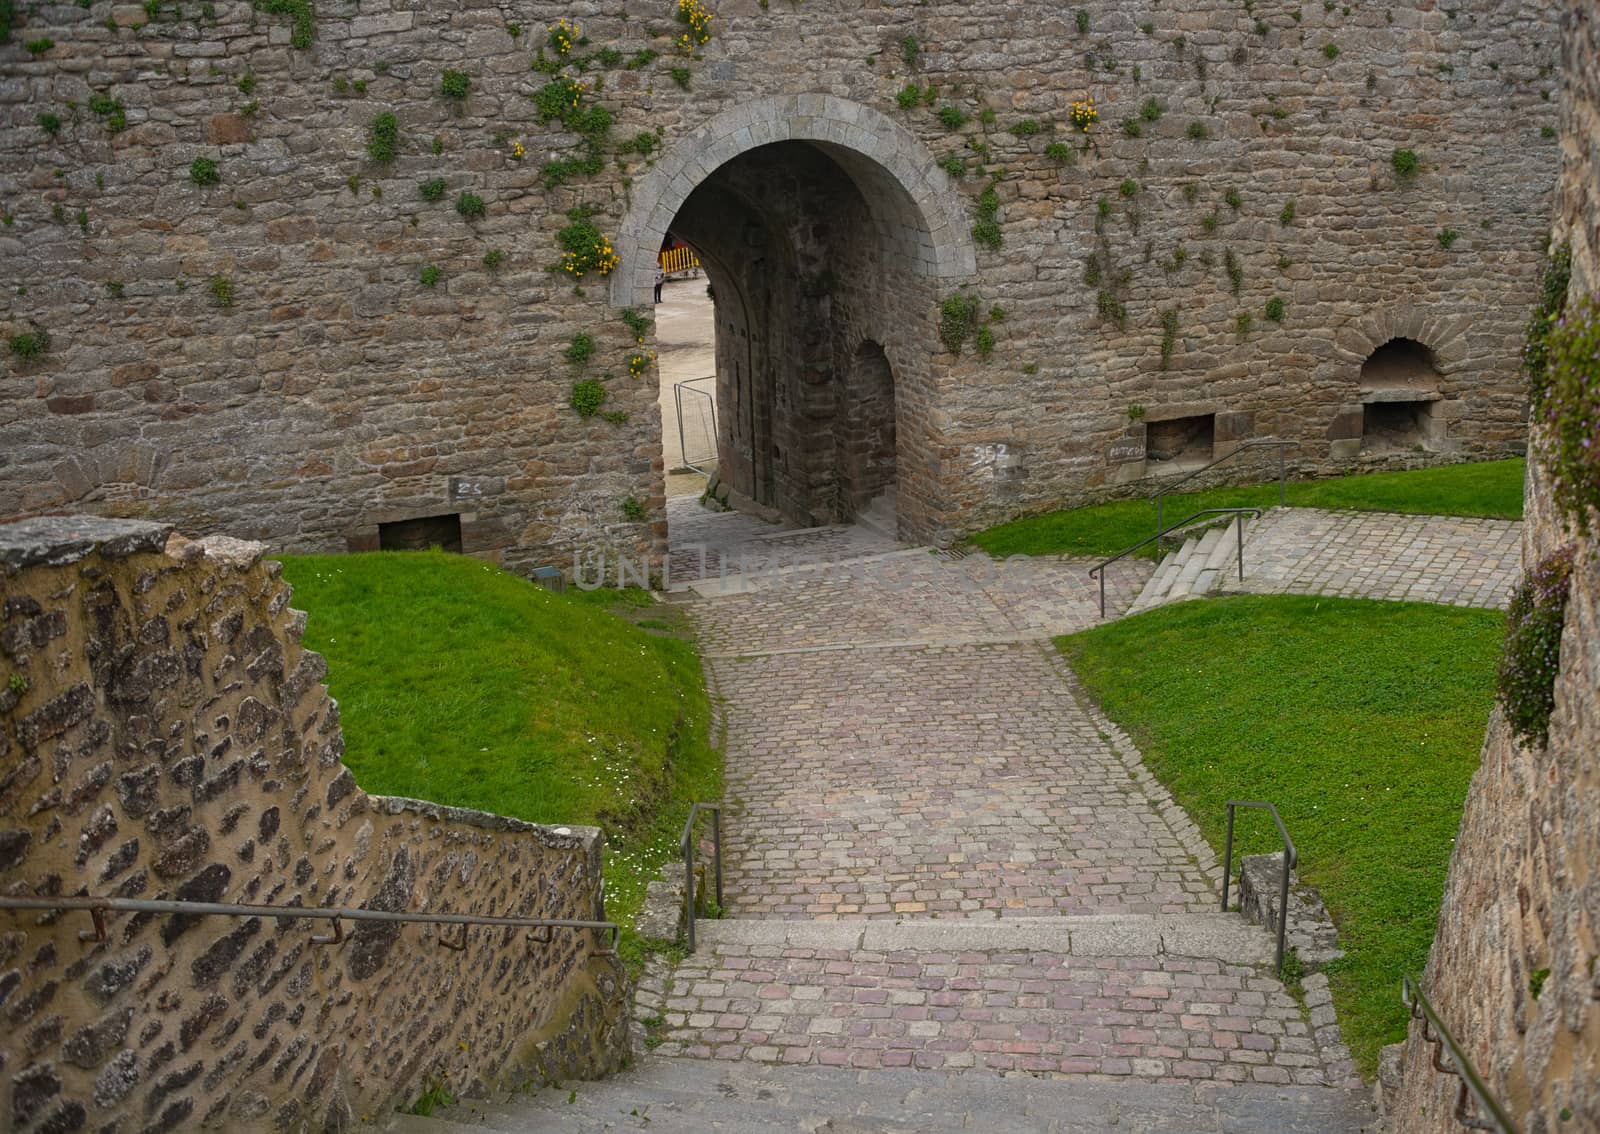 Big stone walls and gate at Dinan fortress, France by sheriffkule